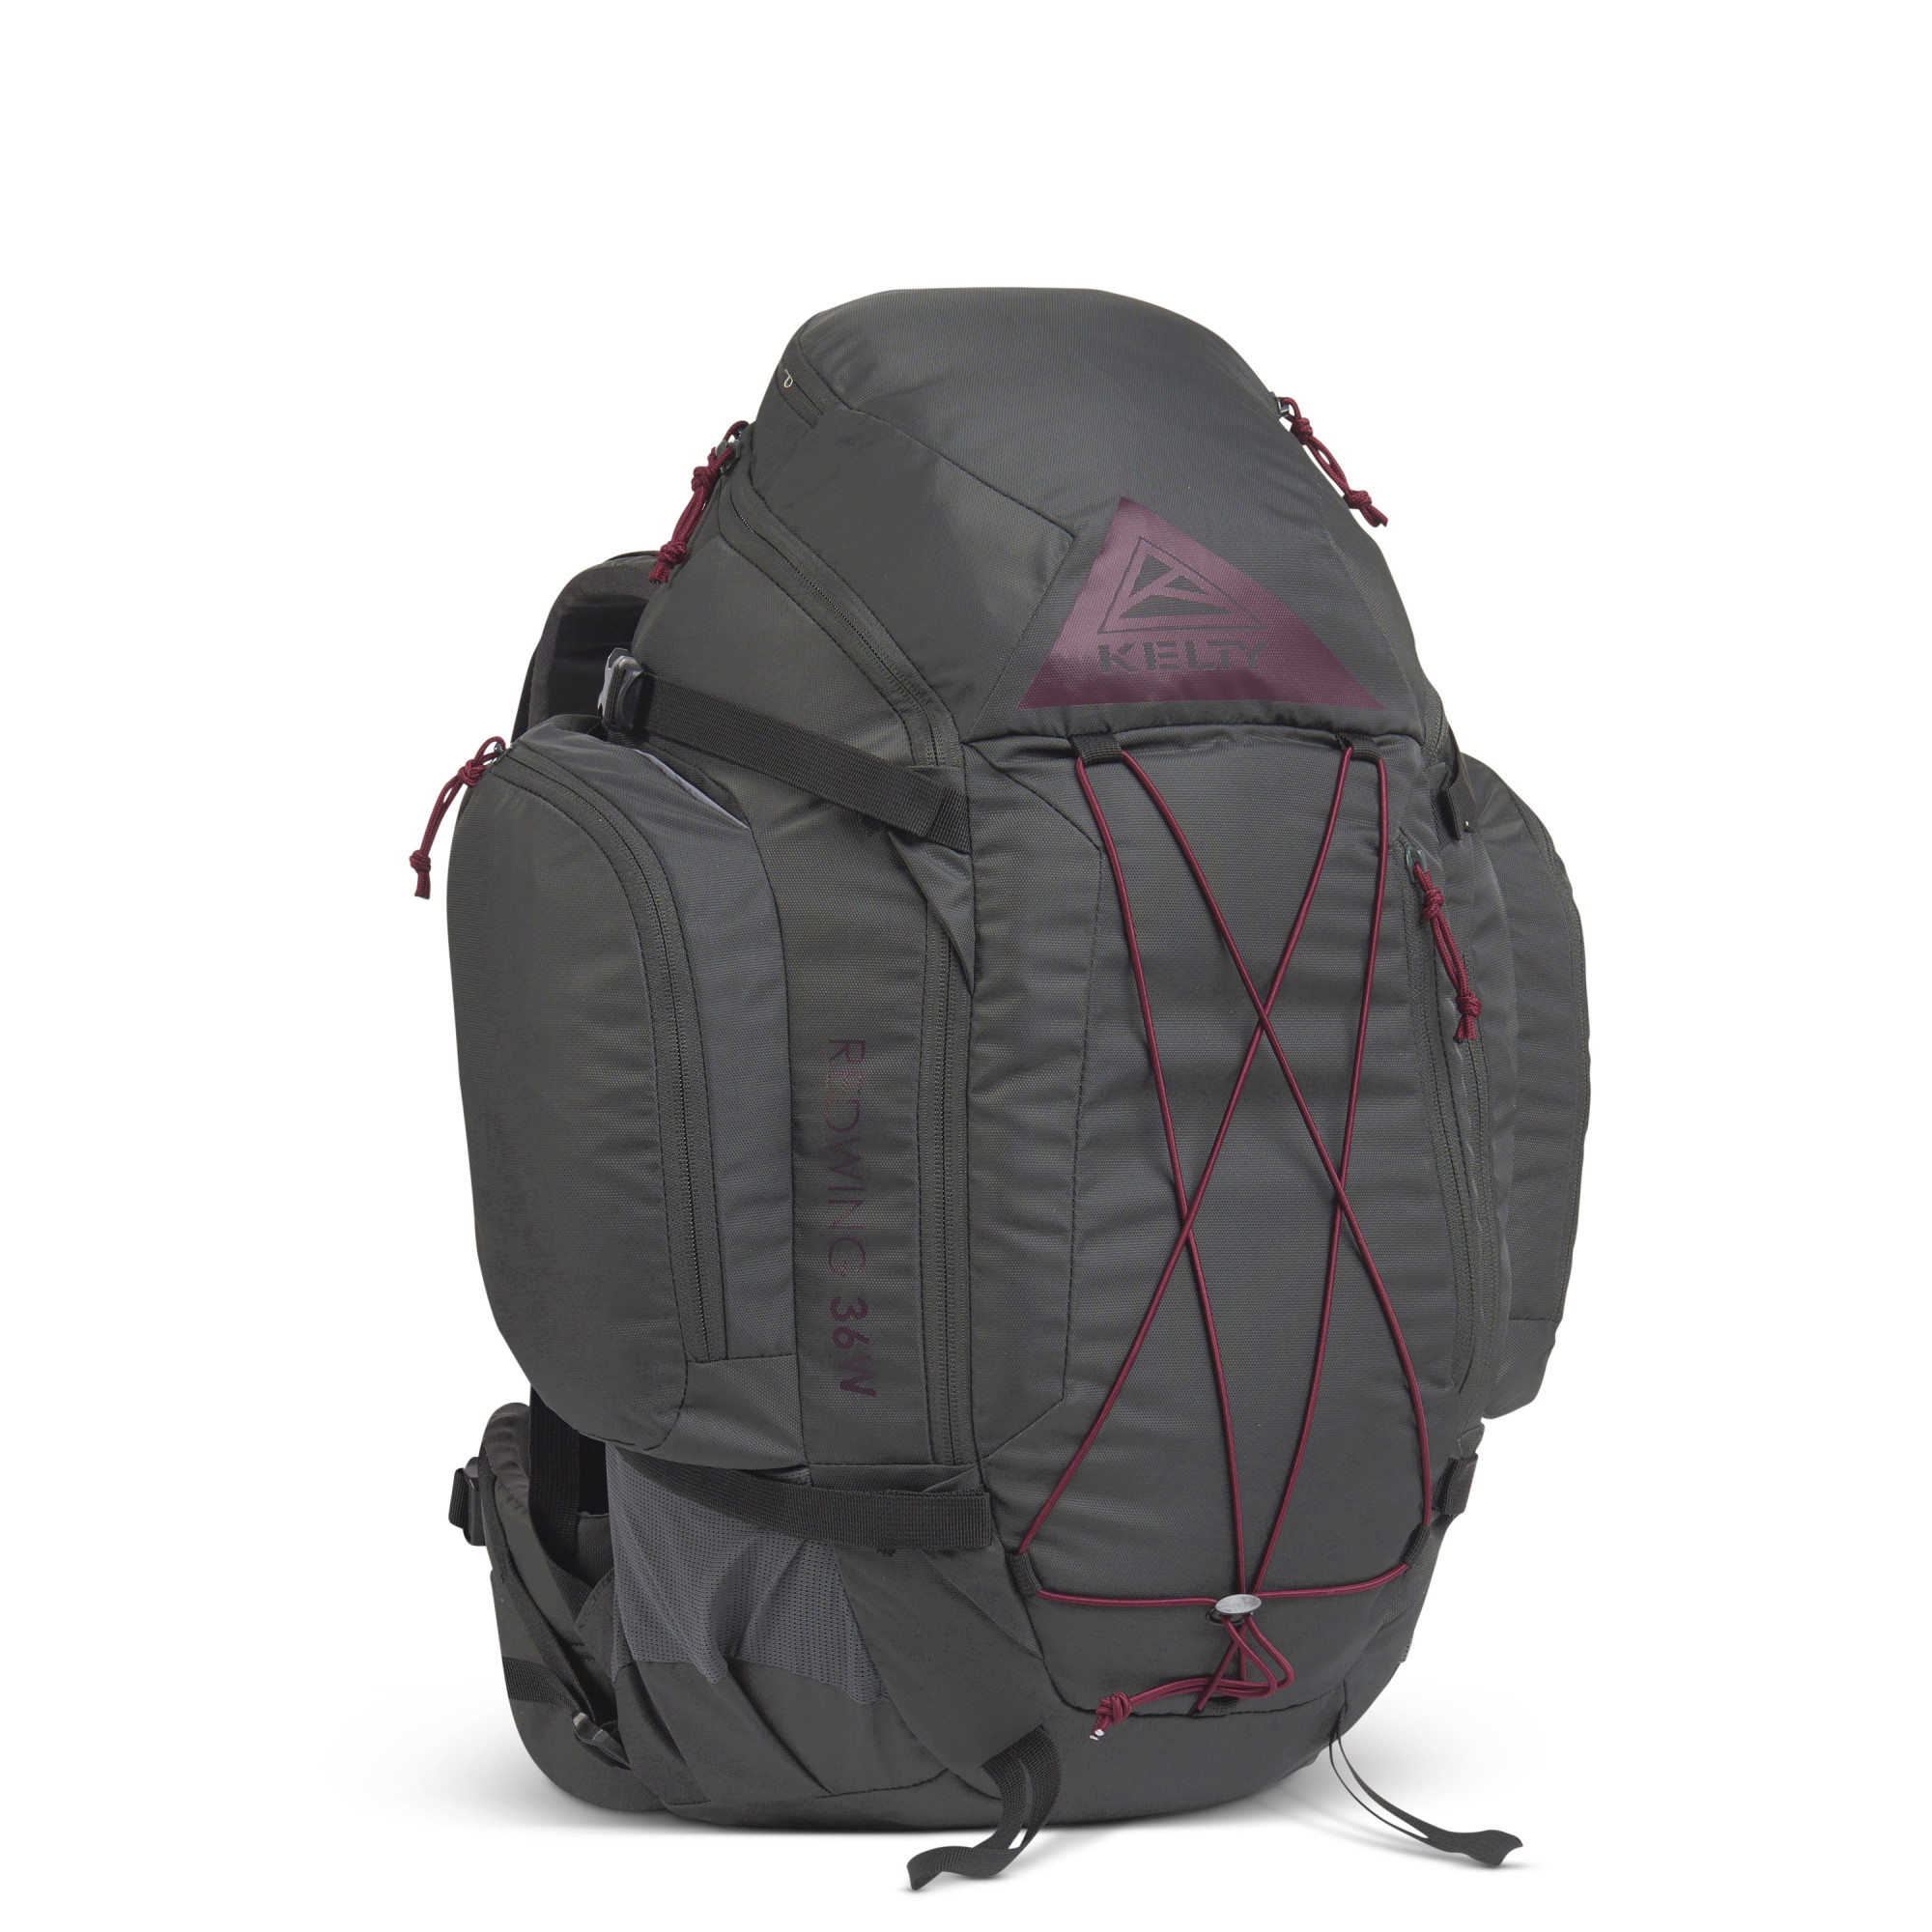 Asphalt/Blackout - Kelty Women's Redwing 36 backpack, front view